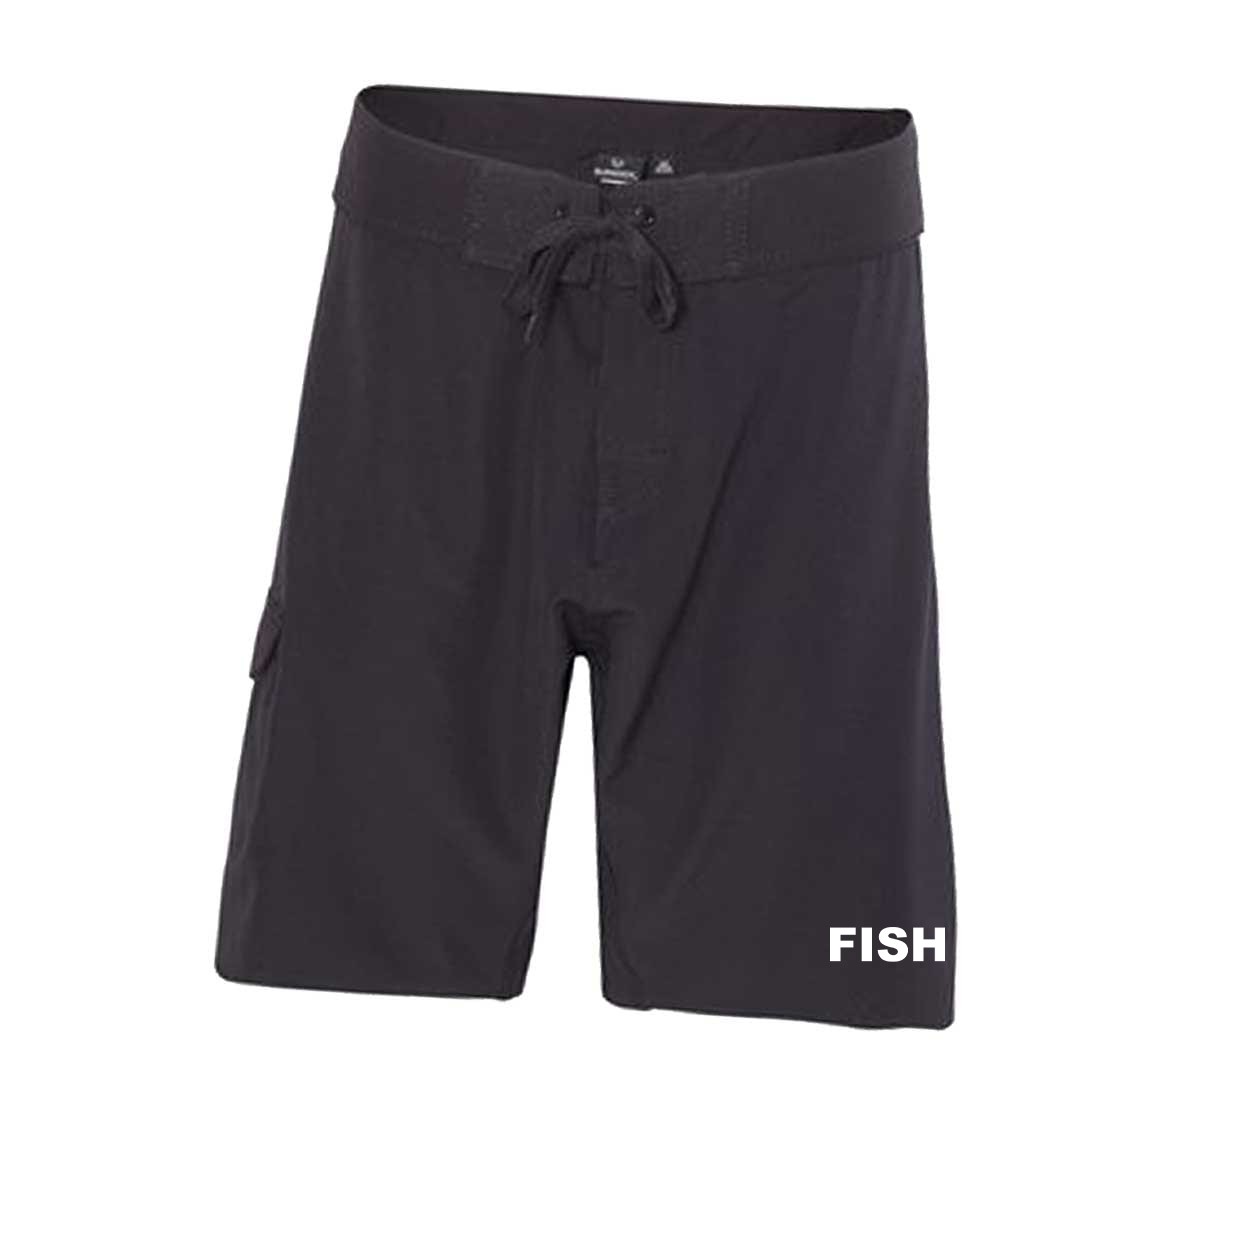 Fish Brand Logo Classic Men's Unisex Boardshorts Swim Trunks Black (White Logo)